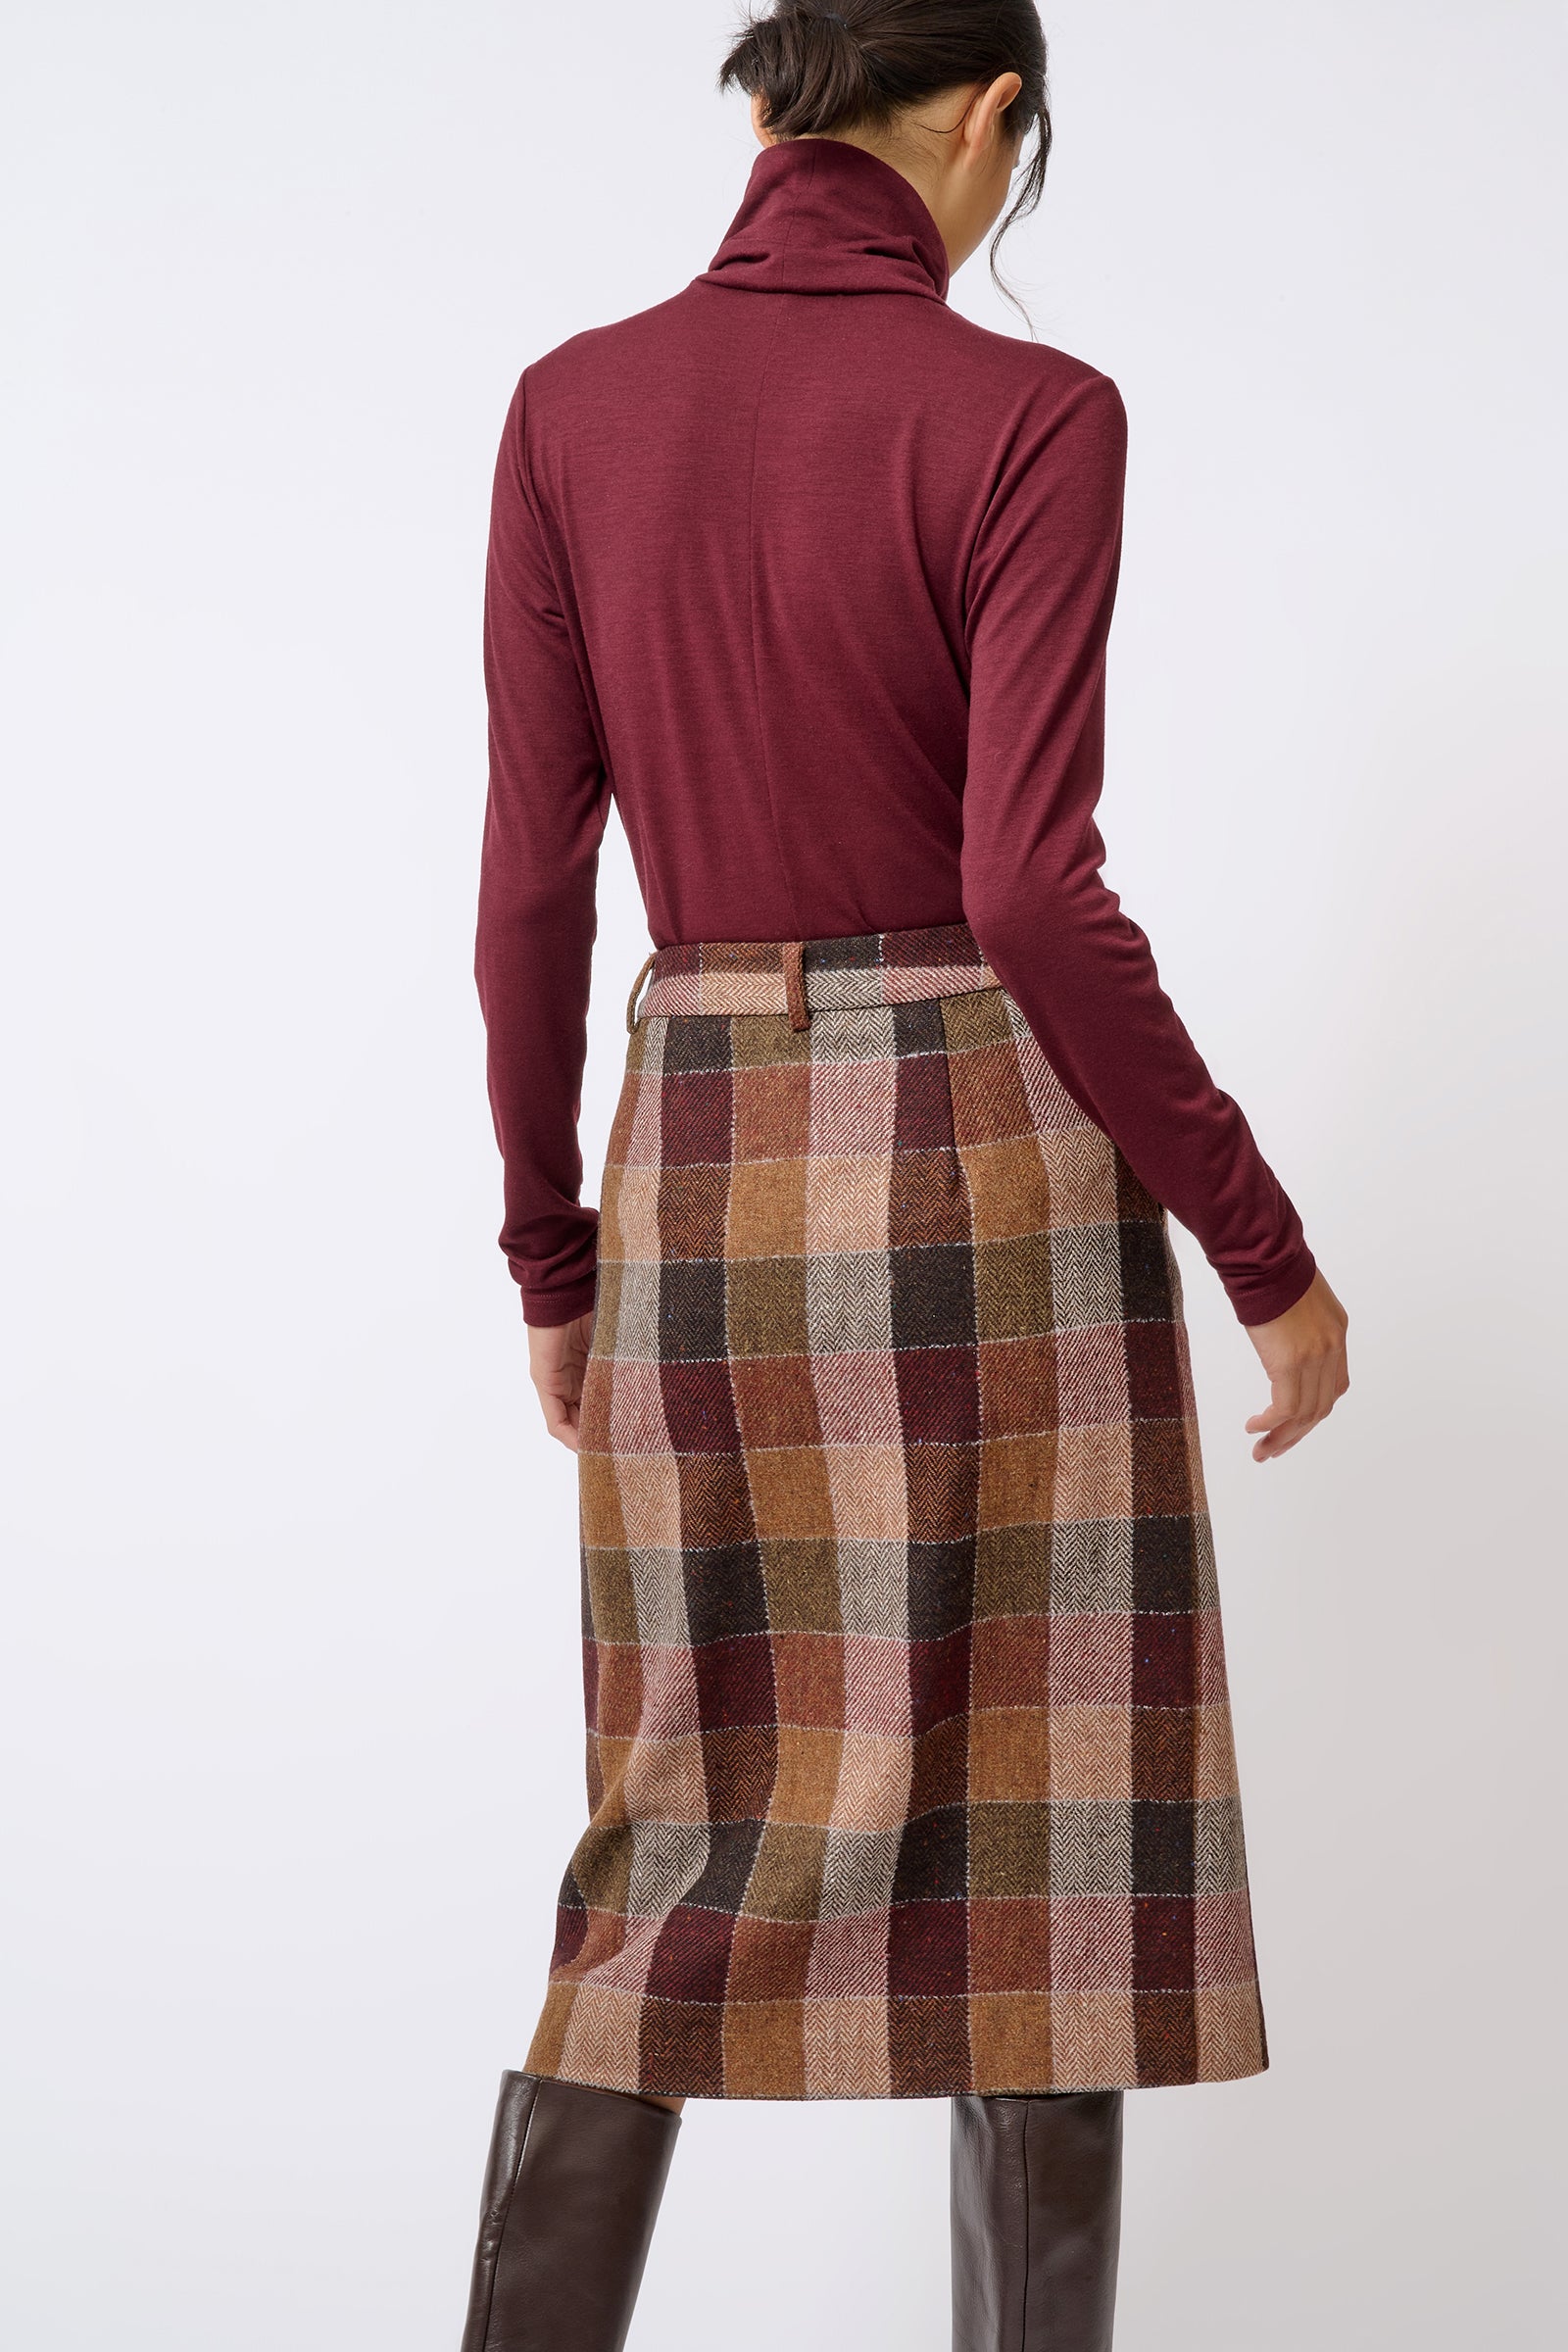 Kal Rieman Caroline Trouser Skirt in Patchwork Fabric on Model Back View